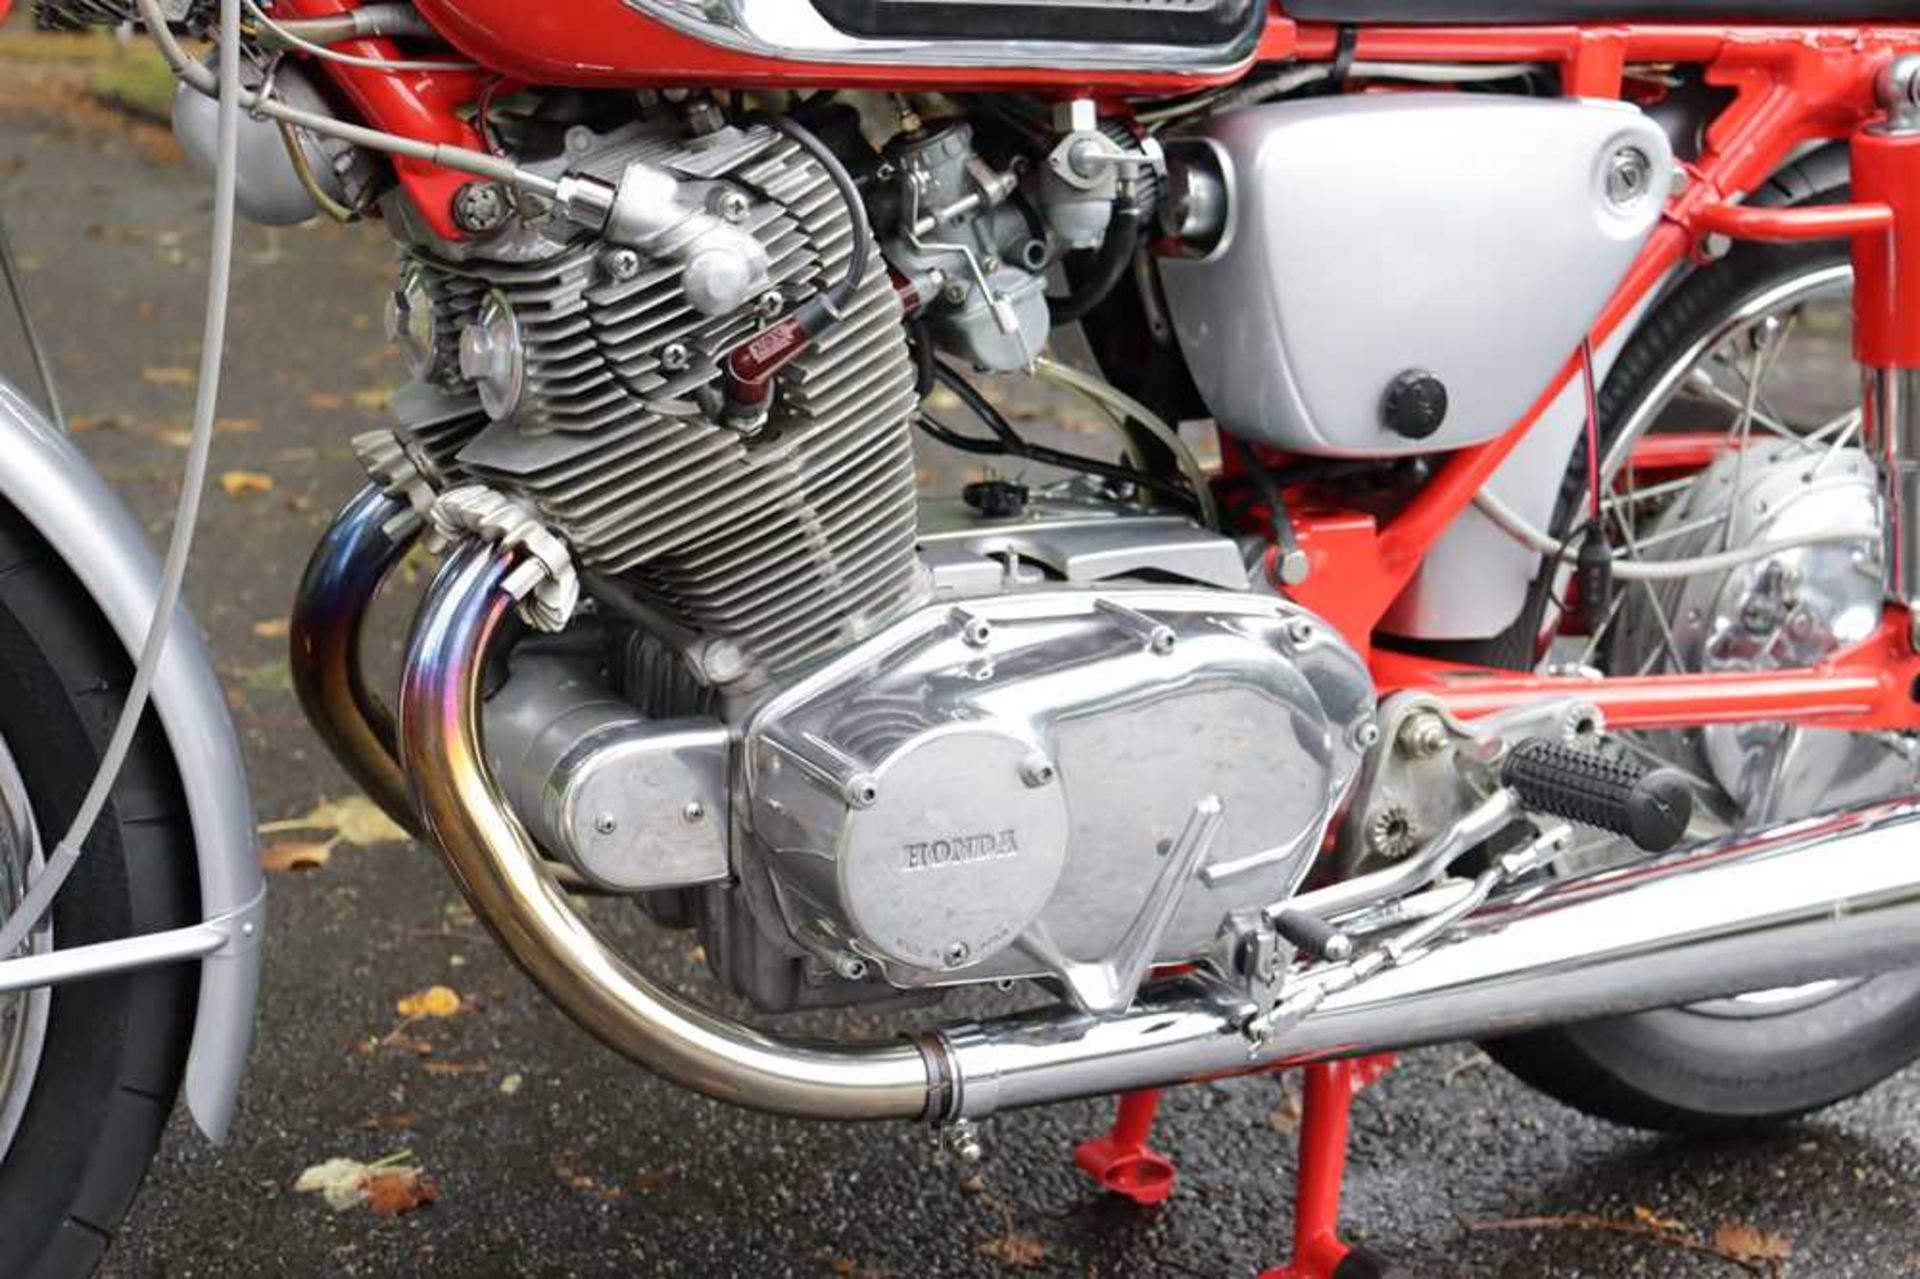 1966 Honda CB77 Restored to a high standard - Image 45 of 65